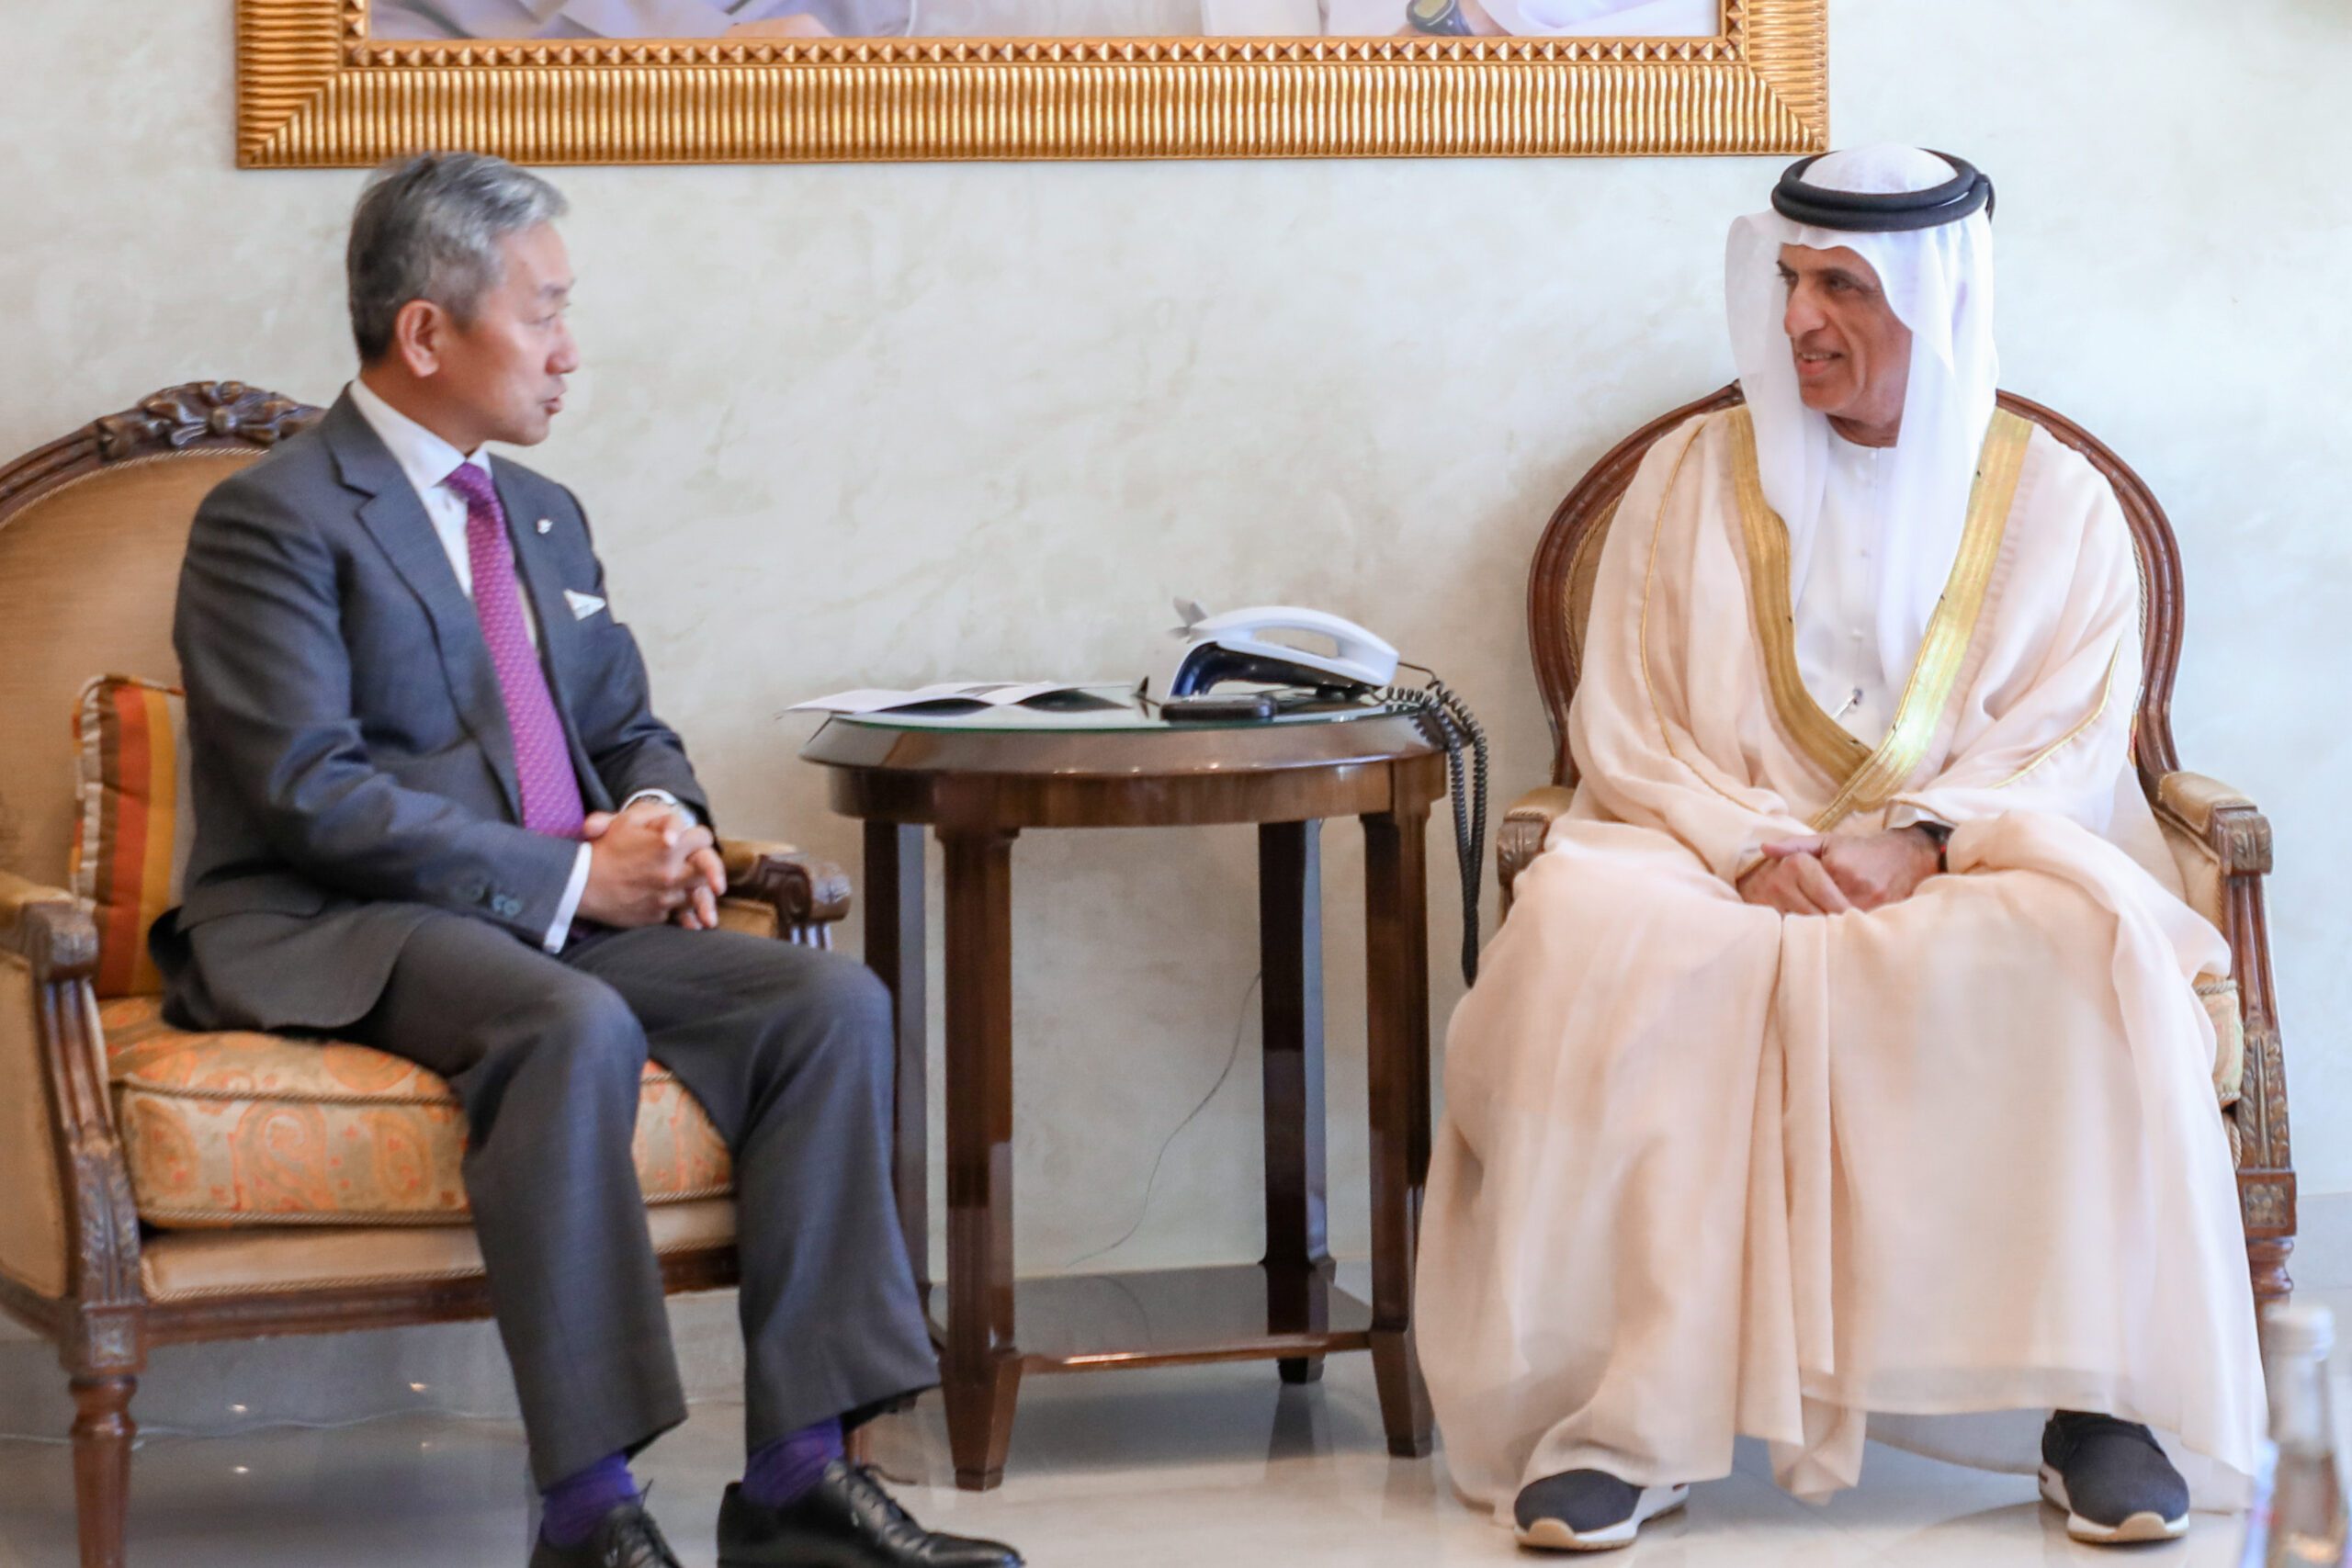 Zhang Yiming meets with Sheikh Saud bin Saqr Al Qasimi, ruler of Ras Al Khaimah, during a visit to the UAE in May